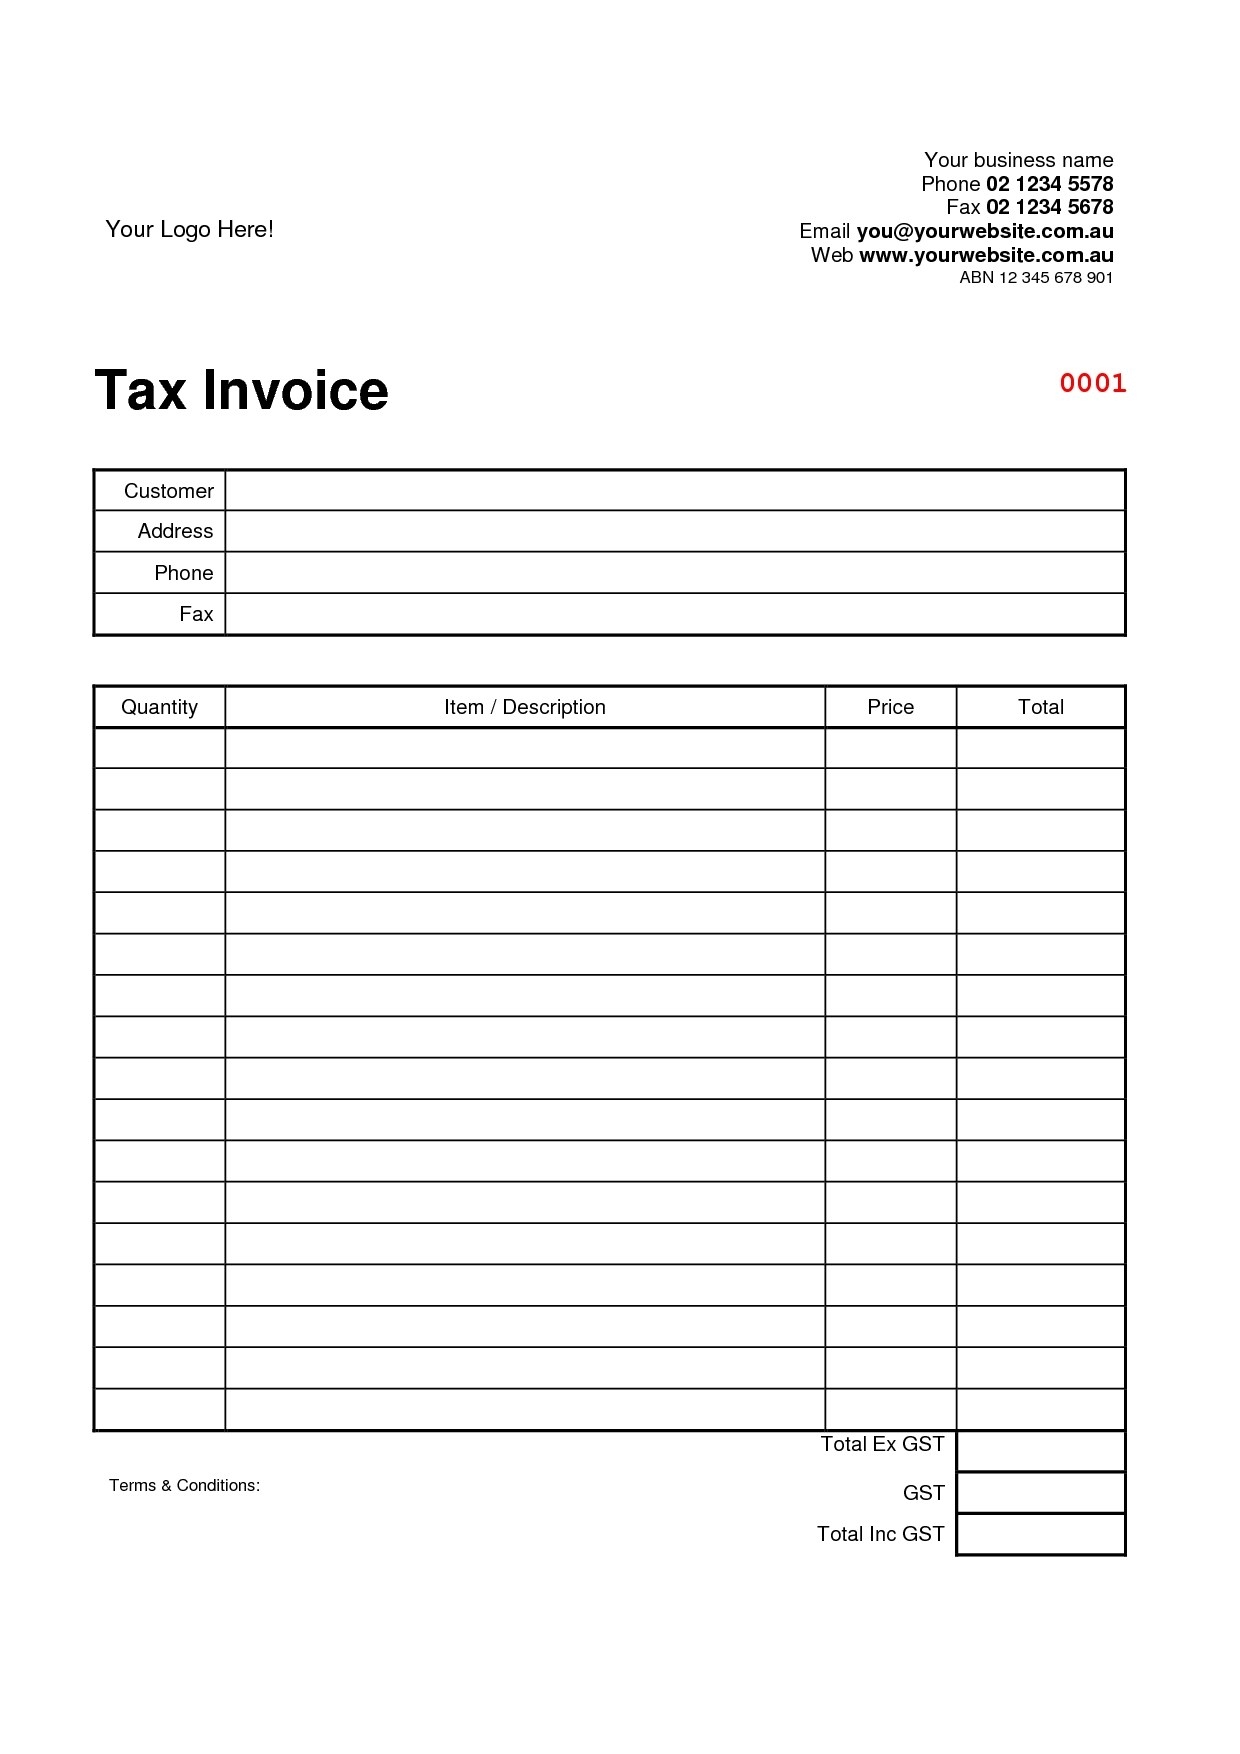 invoice style free invoice design template free excel invoice basic tax invoice template